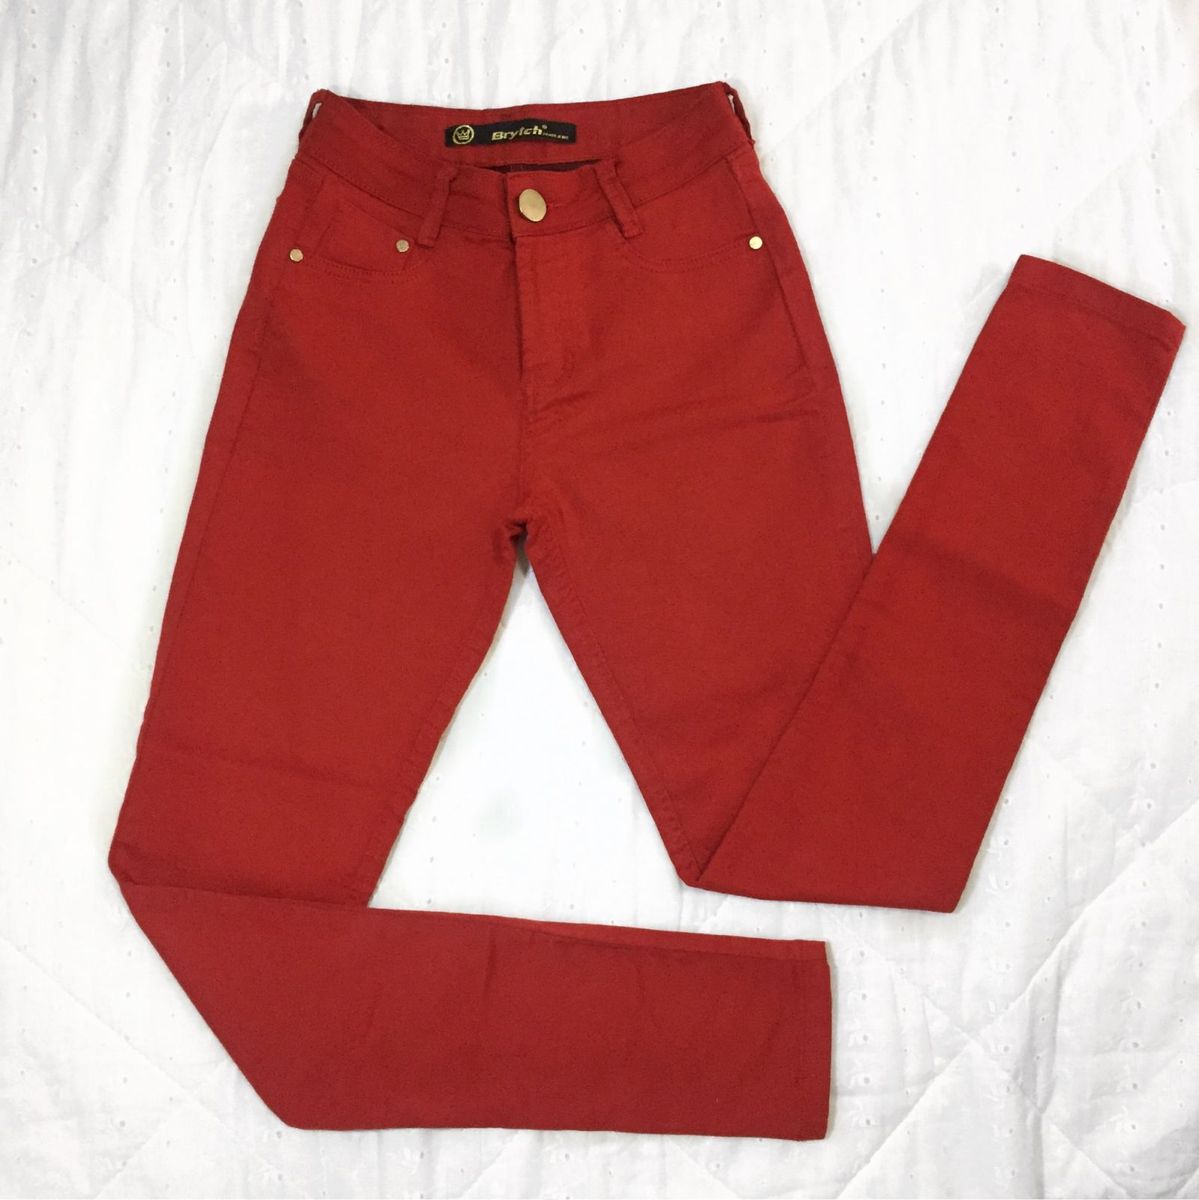 calça jeans feminina vermelha